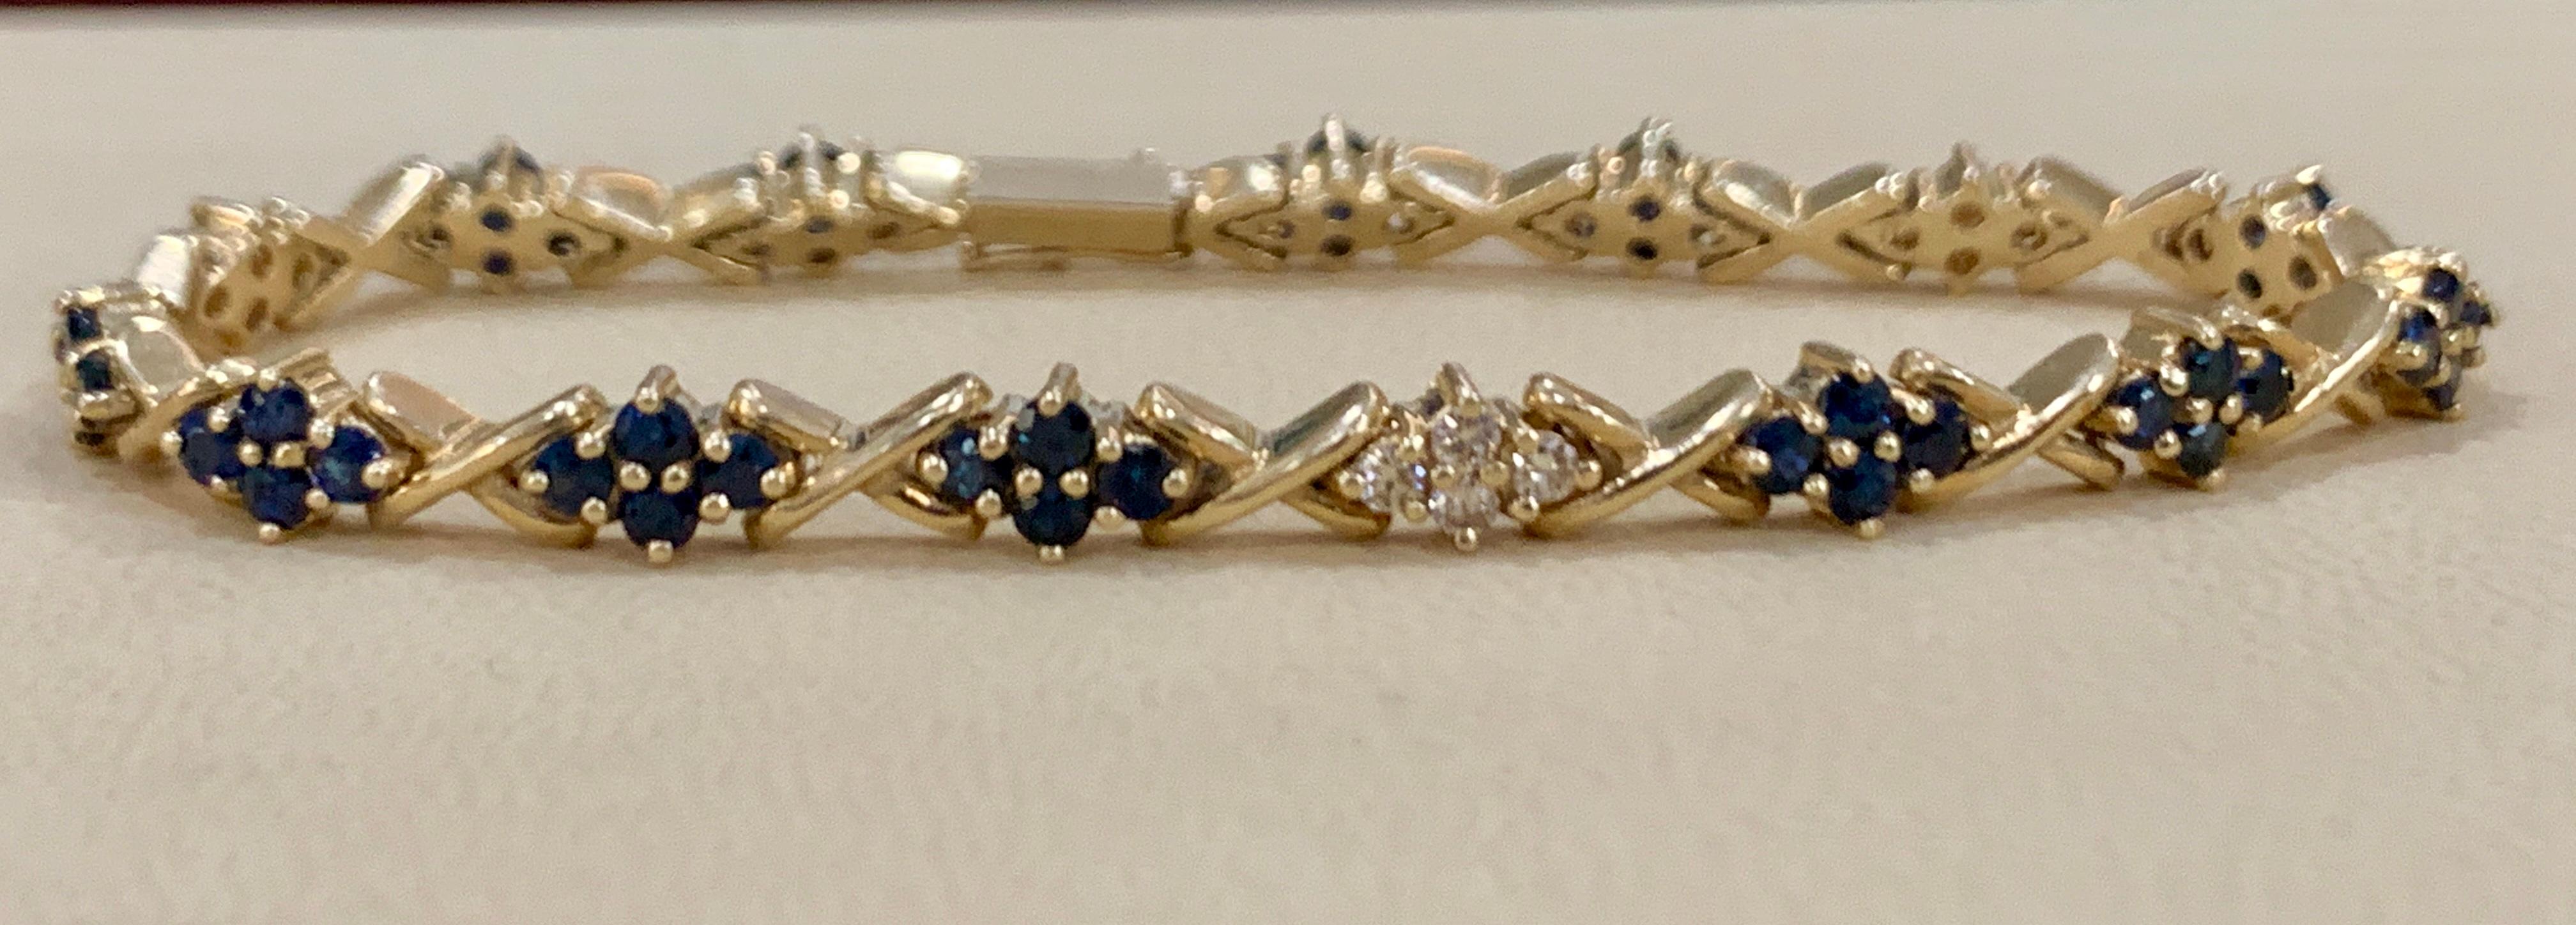 Natural Blue Sapphire and Diamond Tennis Bracelet 14 Karat Yellow Gold 7 Inch 1